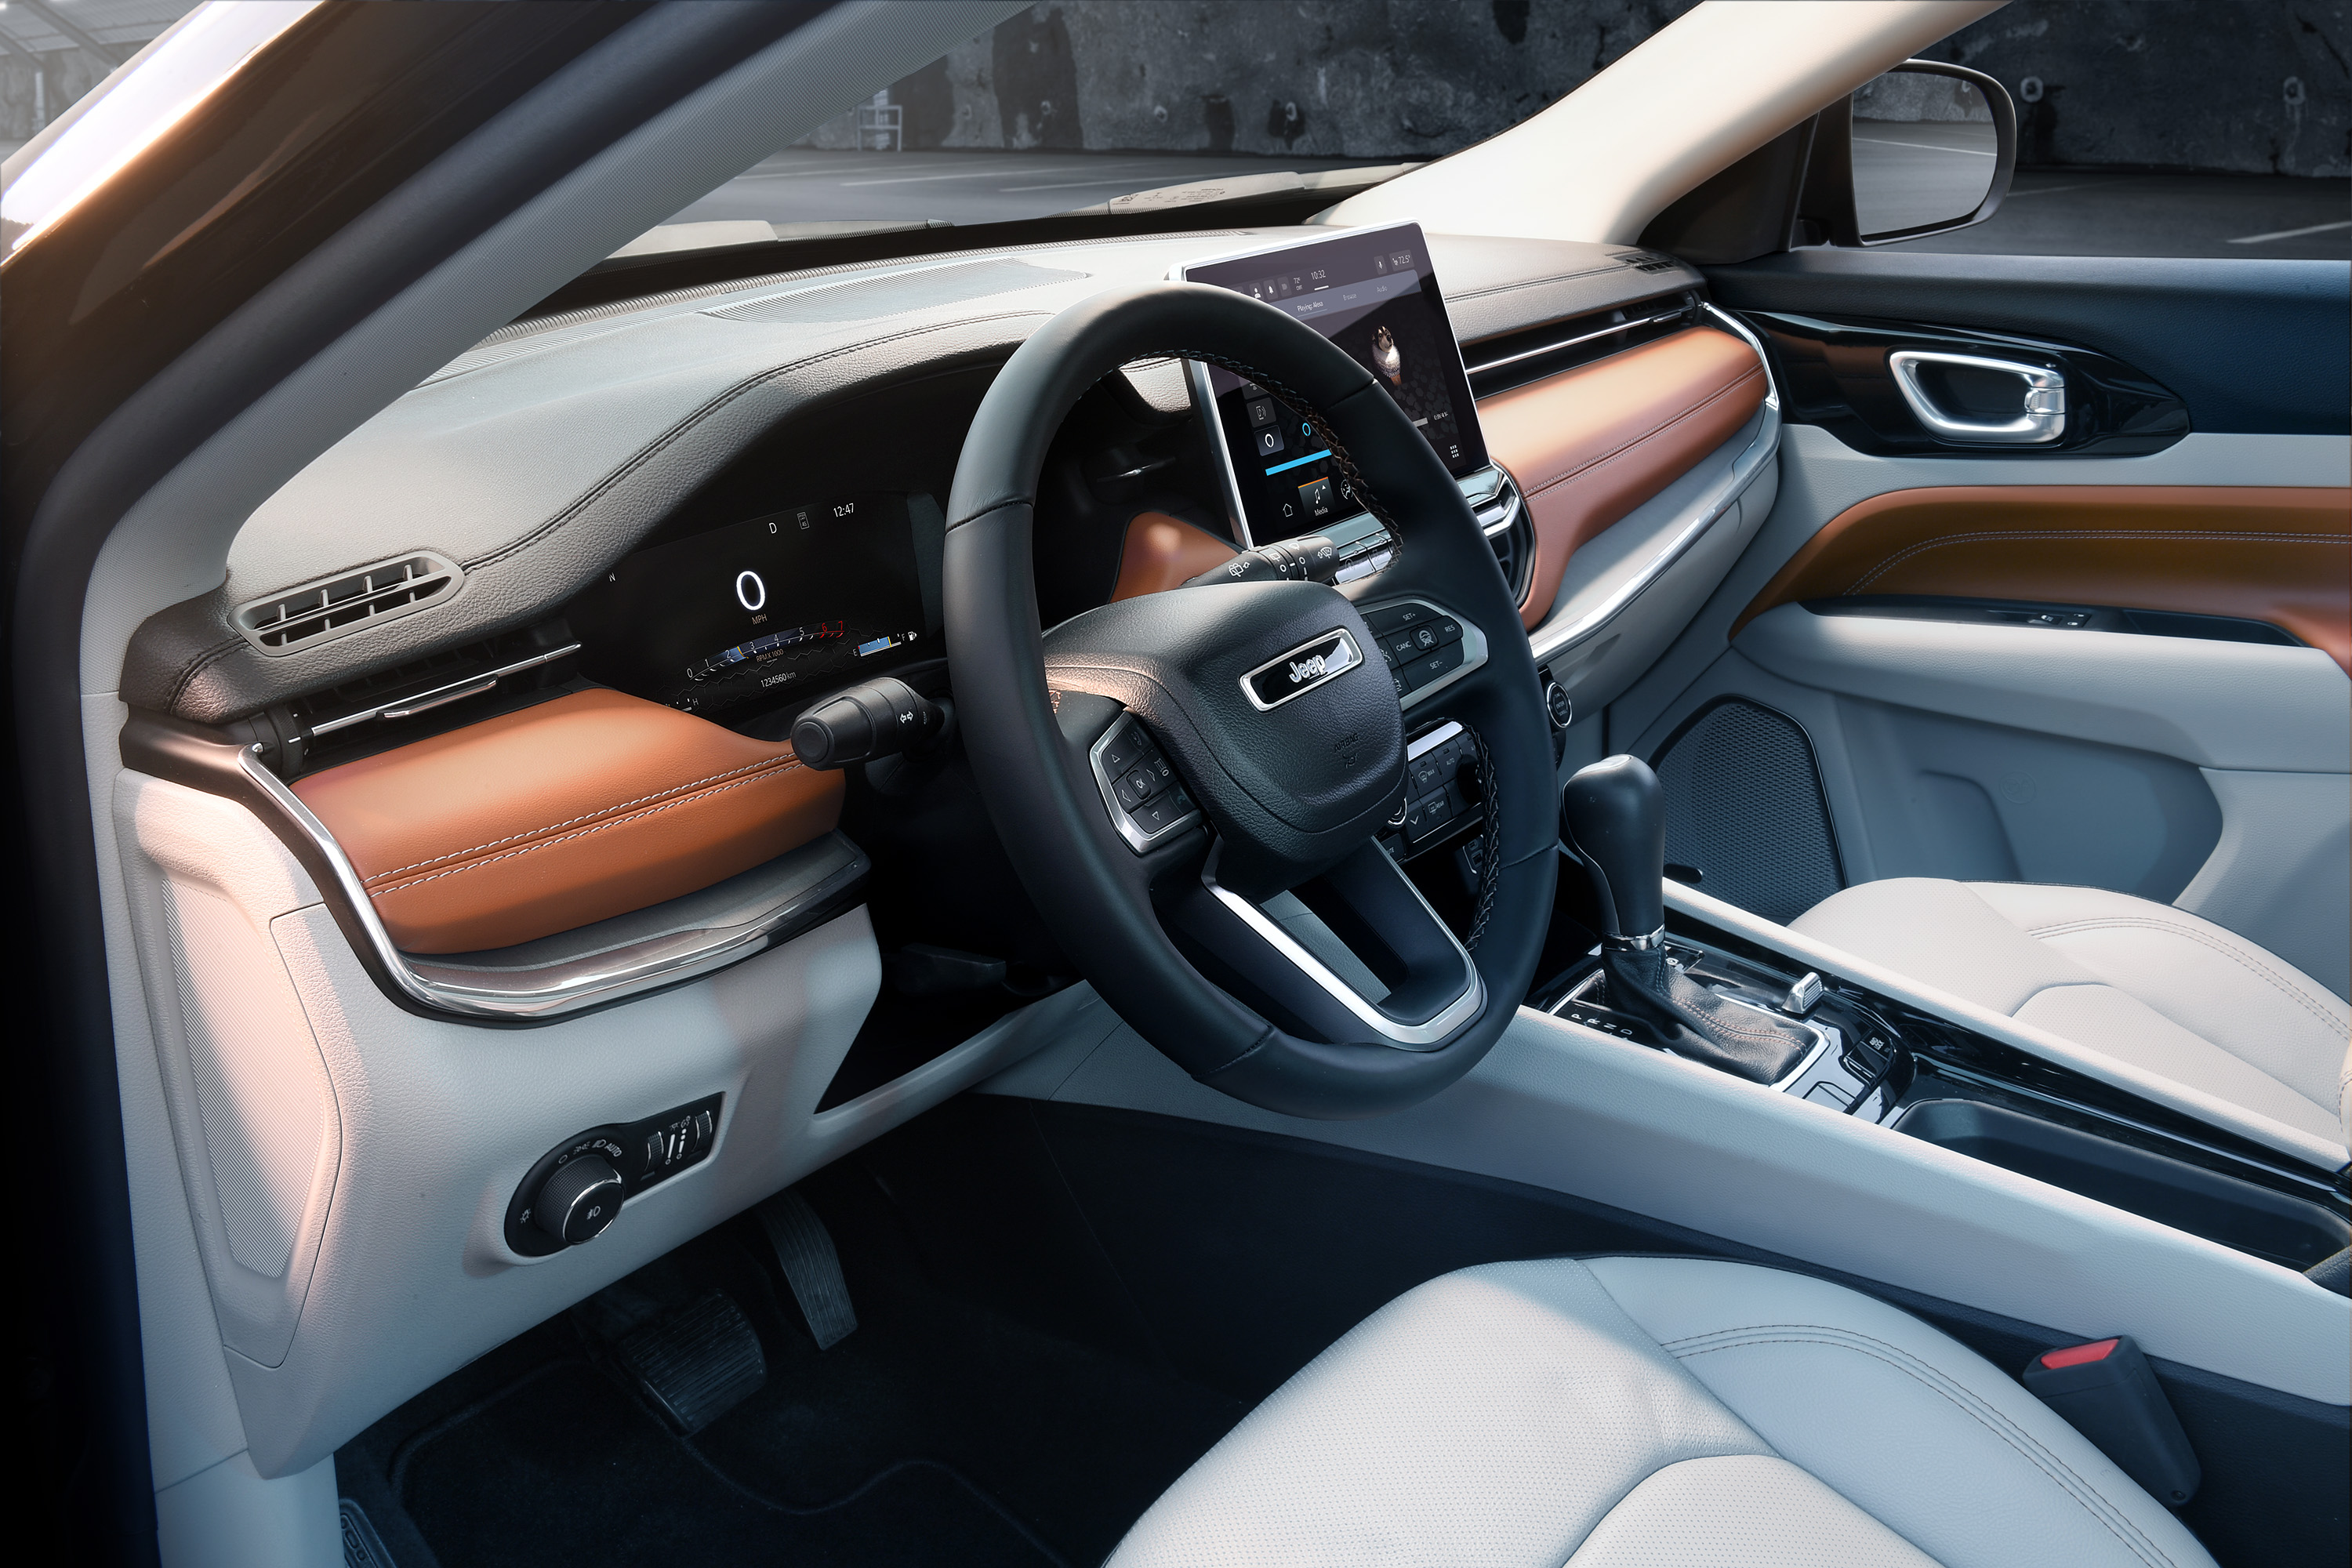 2022 Jeep Compass interior.jpg